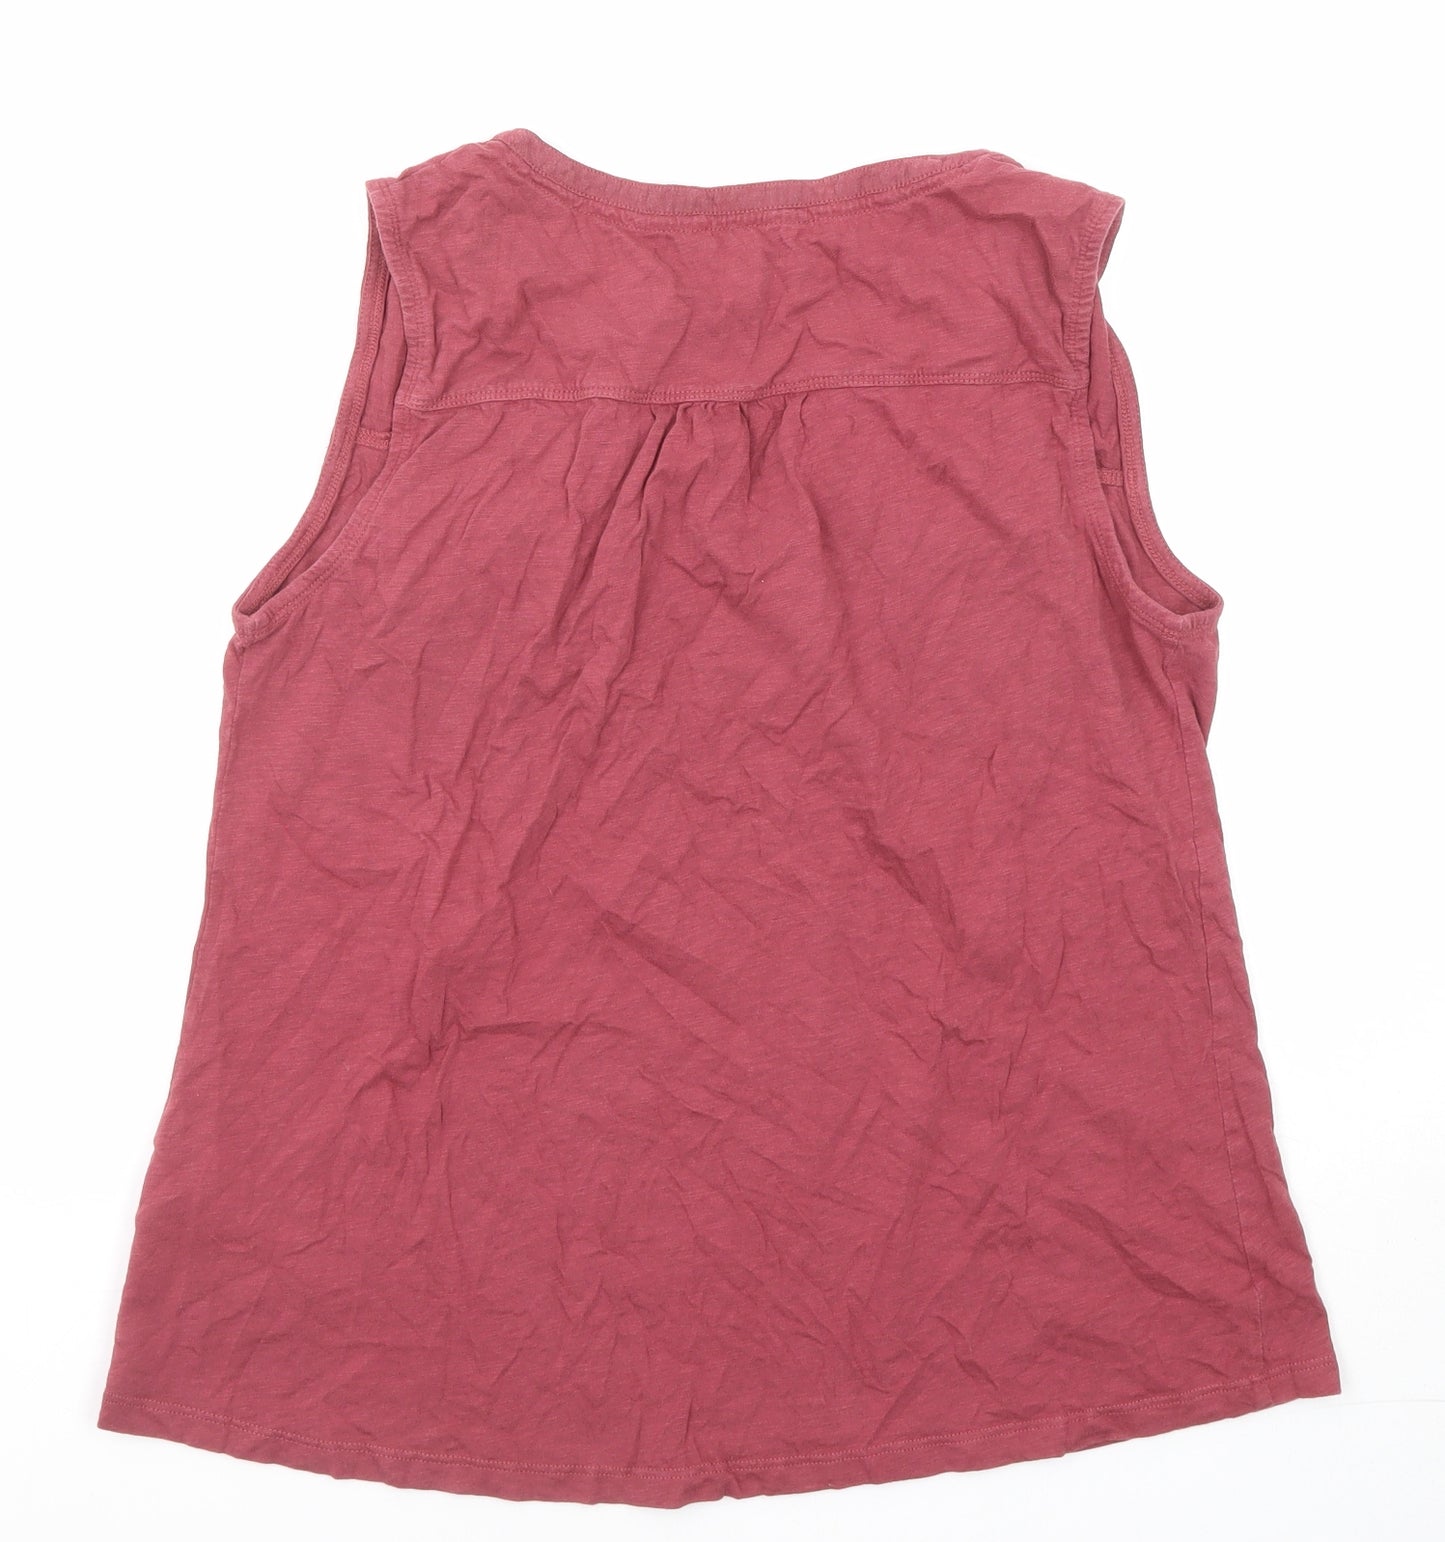 White Stuff Womens Pink Cotton Basic Tank Size 14 V-Neck